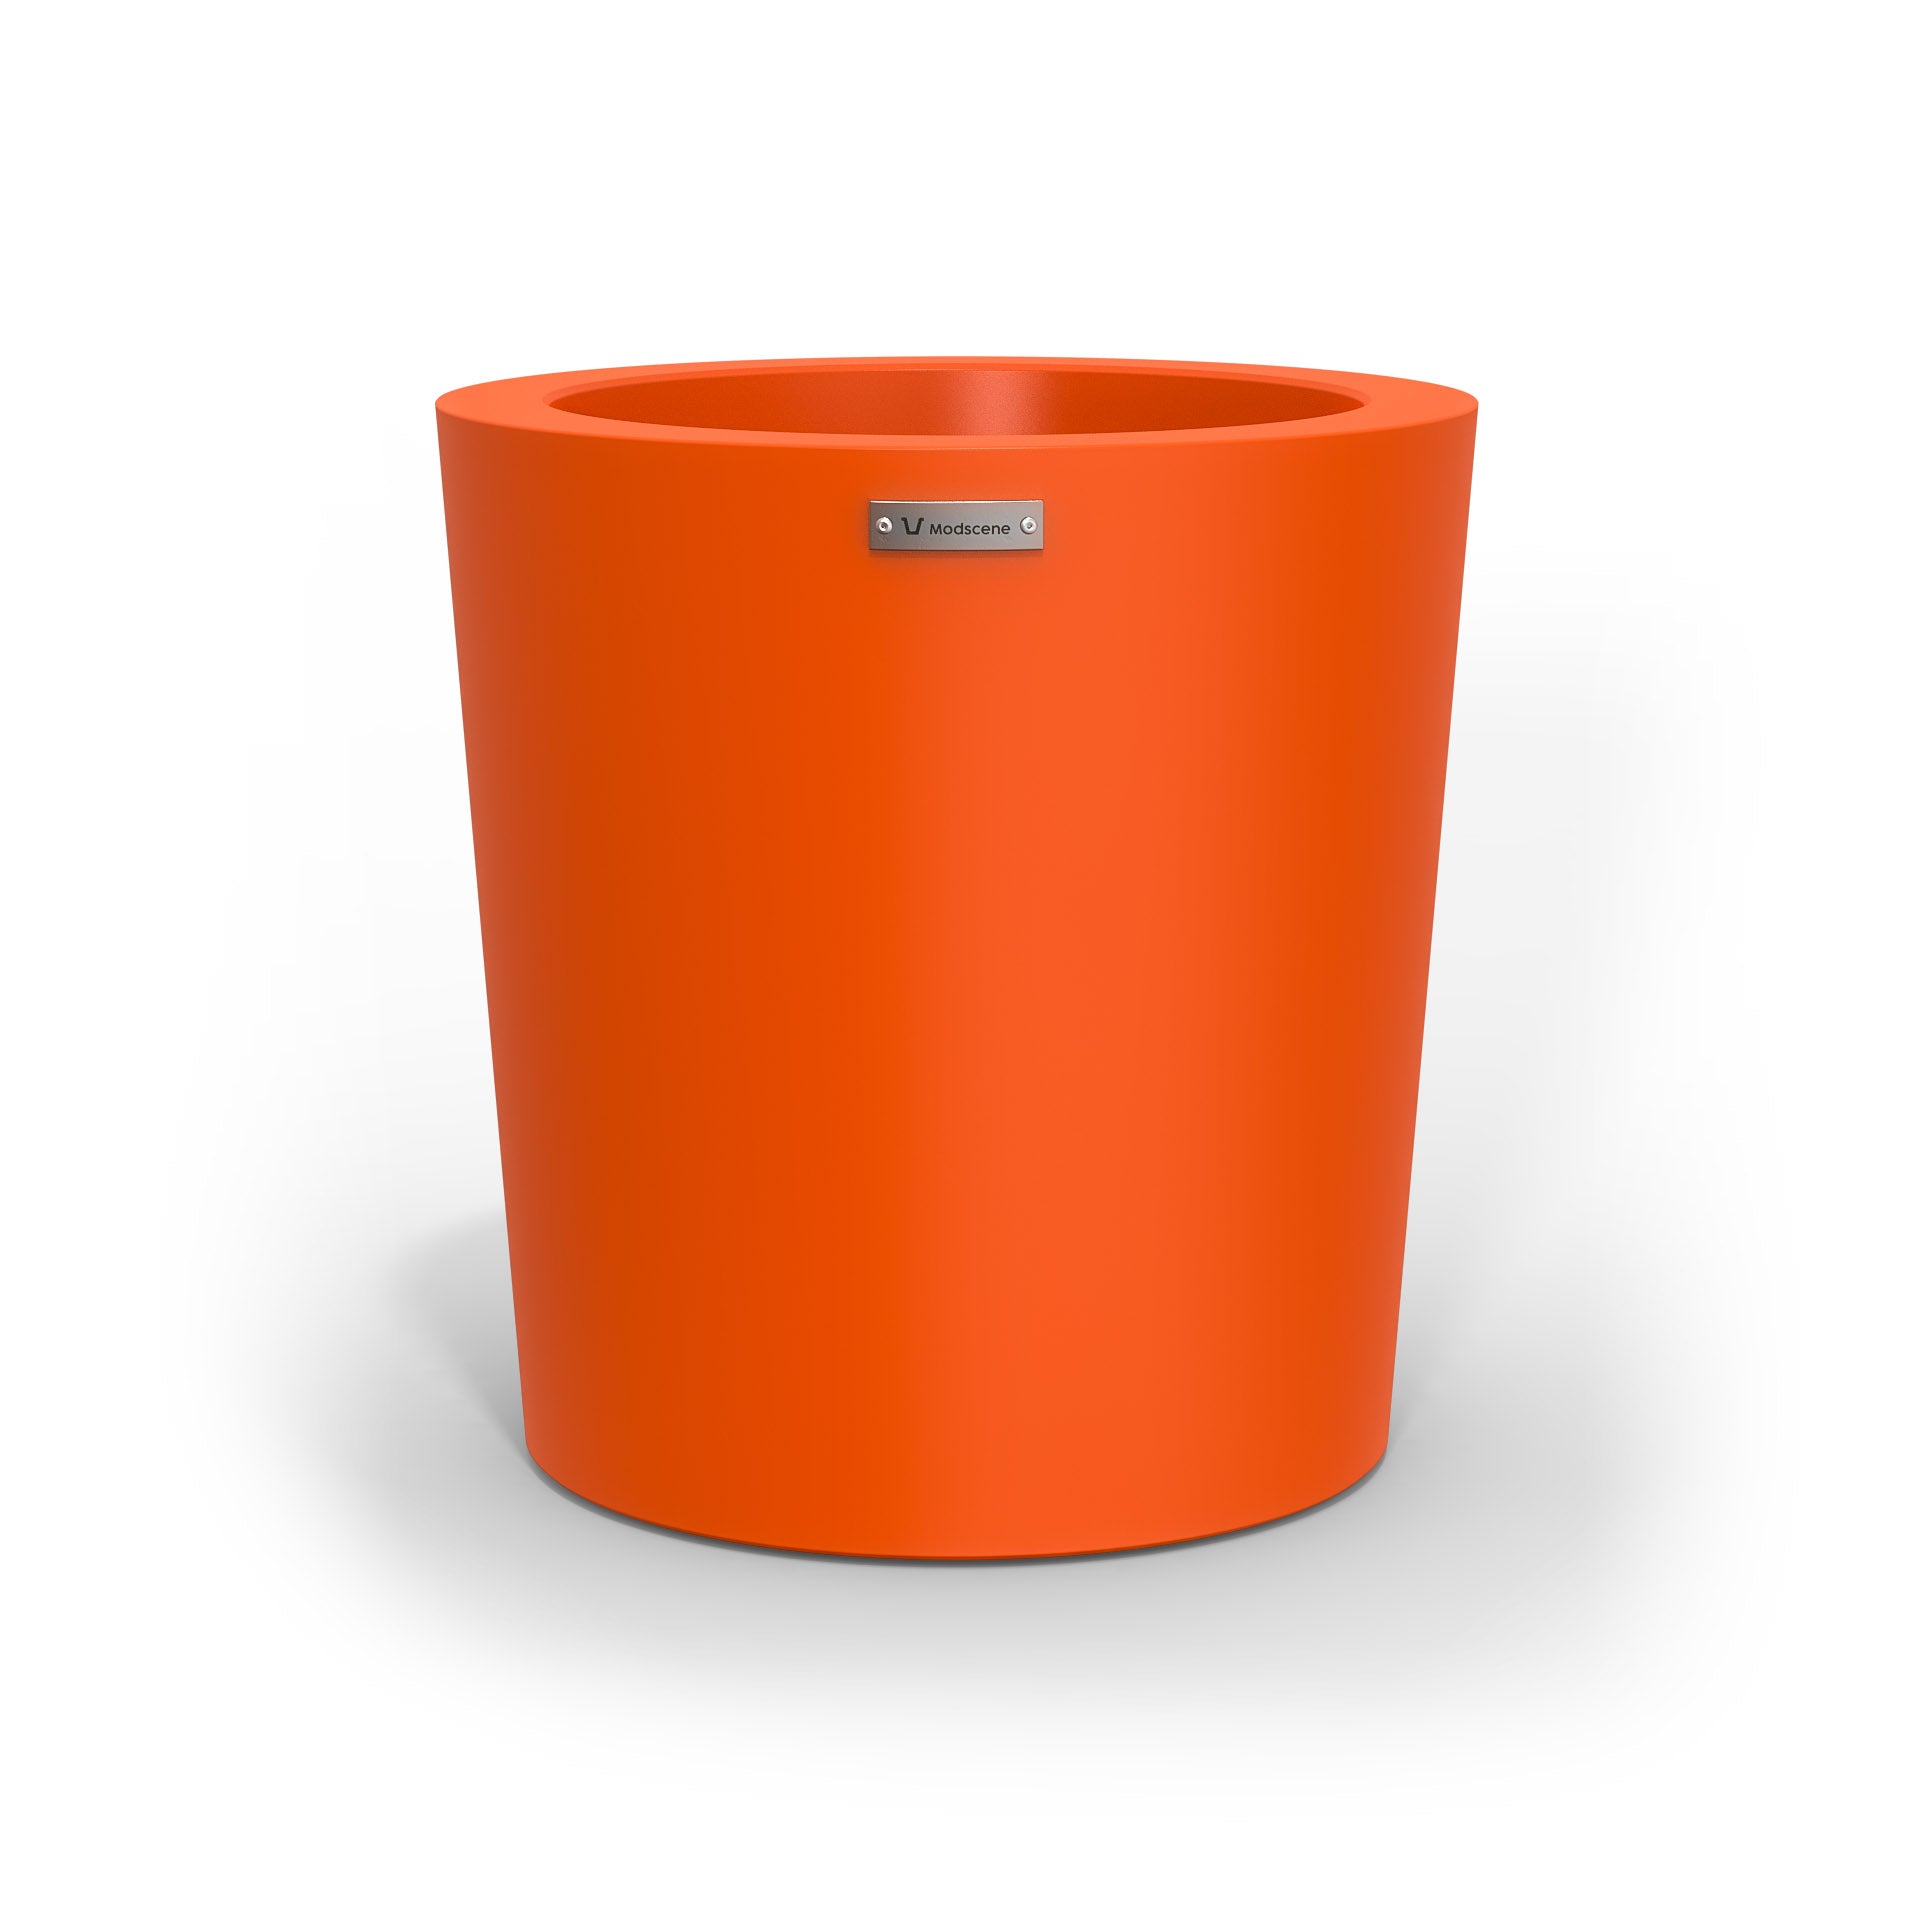 A modern designer planter pot in a orange colour. 